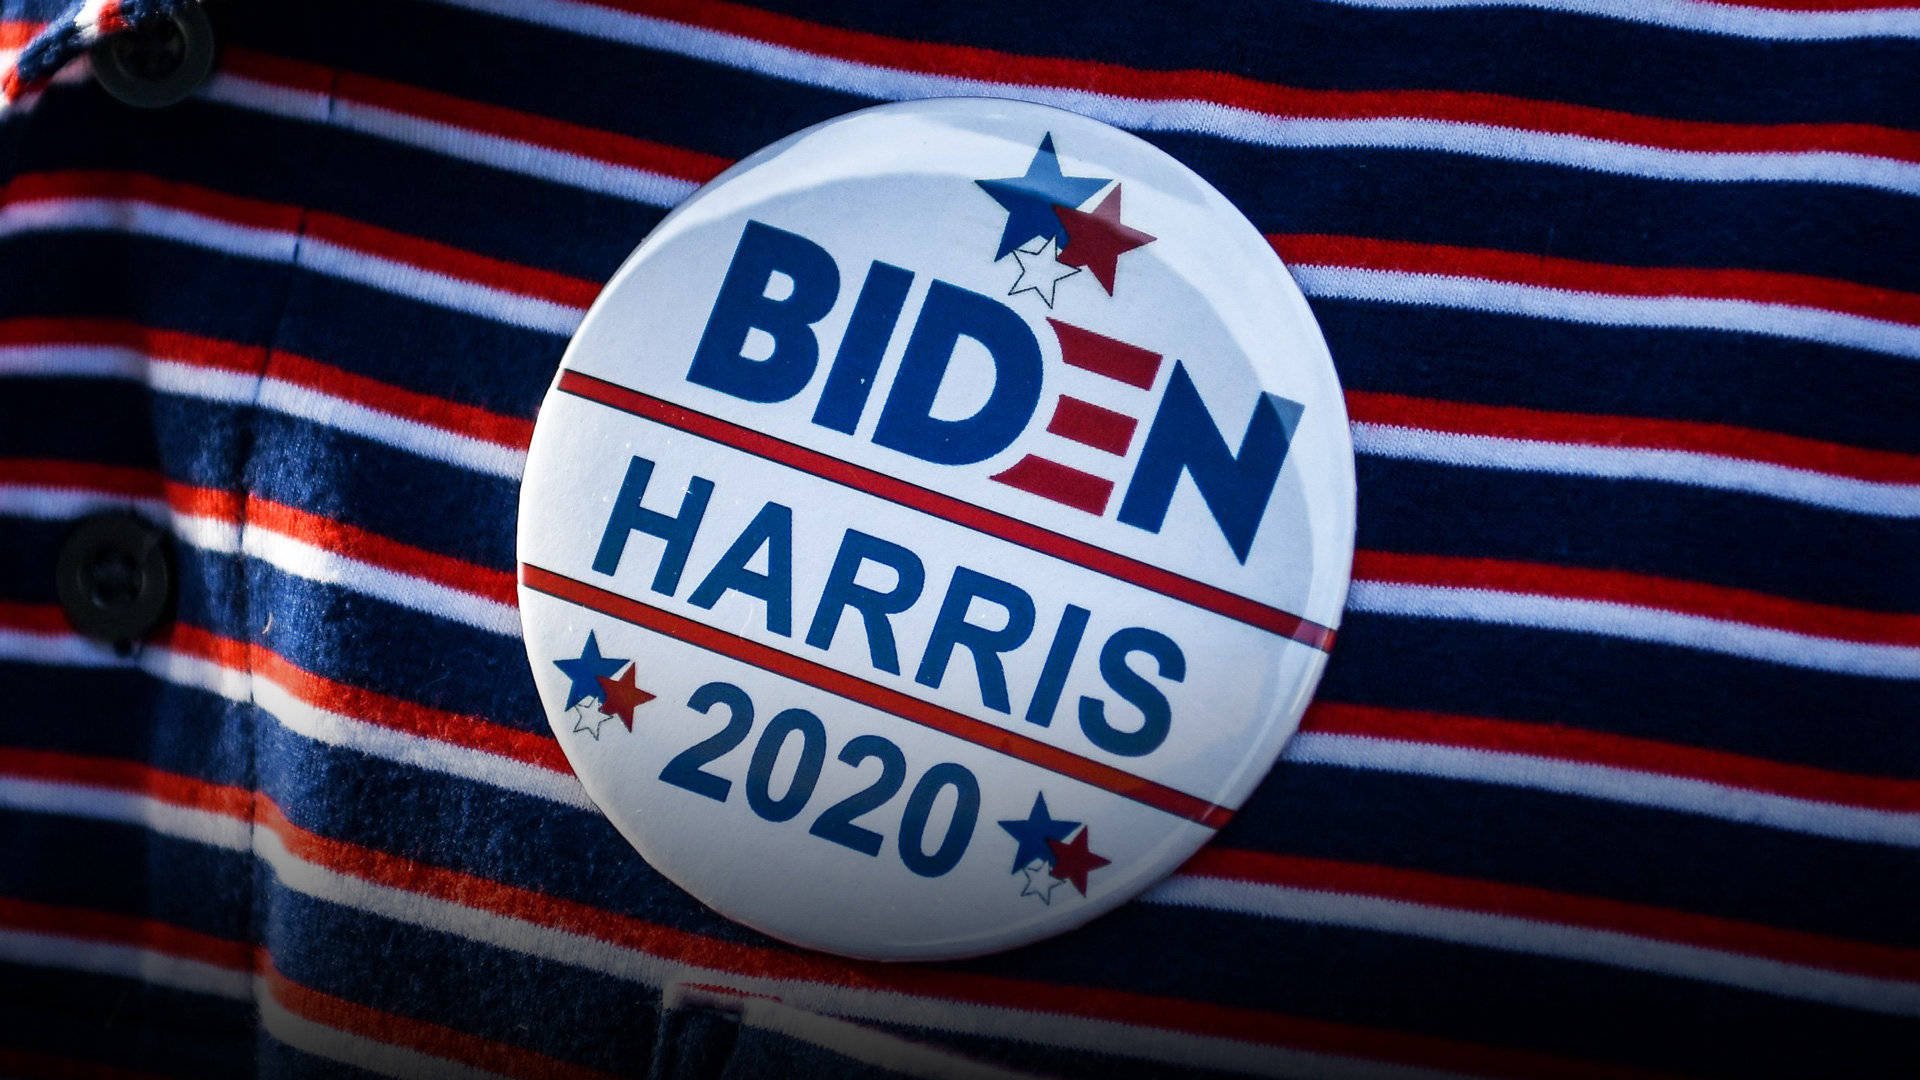 Joe Biden And Kamala Harris 2020 Background